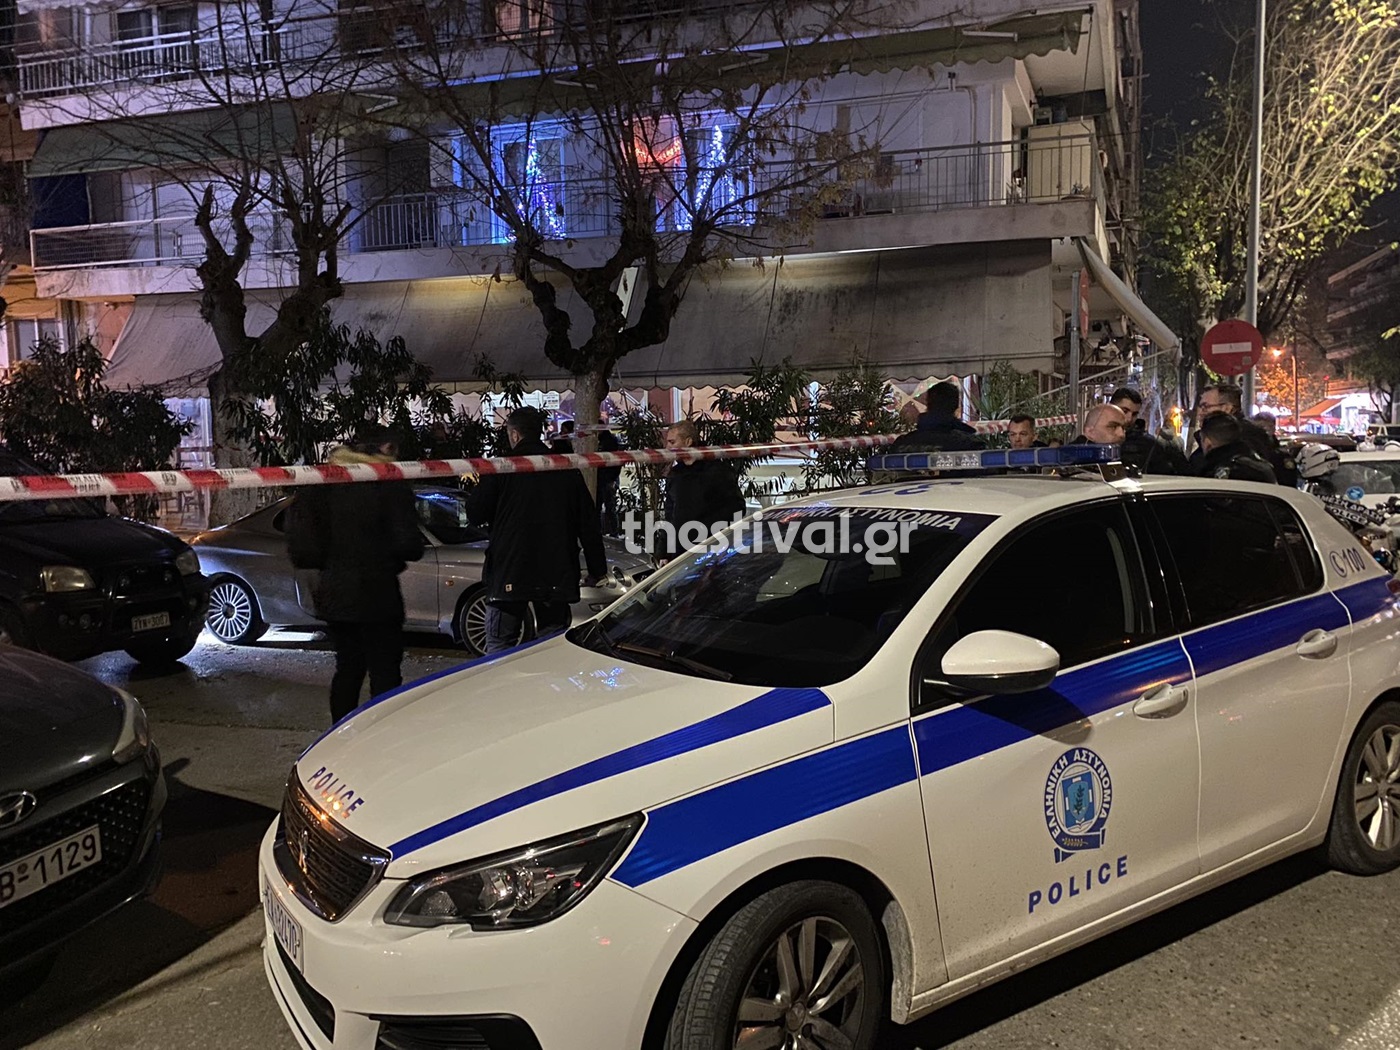 EKTAKTO - Θεσσαλονίκη: Αιματηρό επεισόδιο με πυροβολισμούς – Ένας τραυματίας στο νοσοκομείο (φωτο & βίντεο)